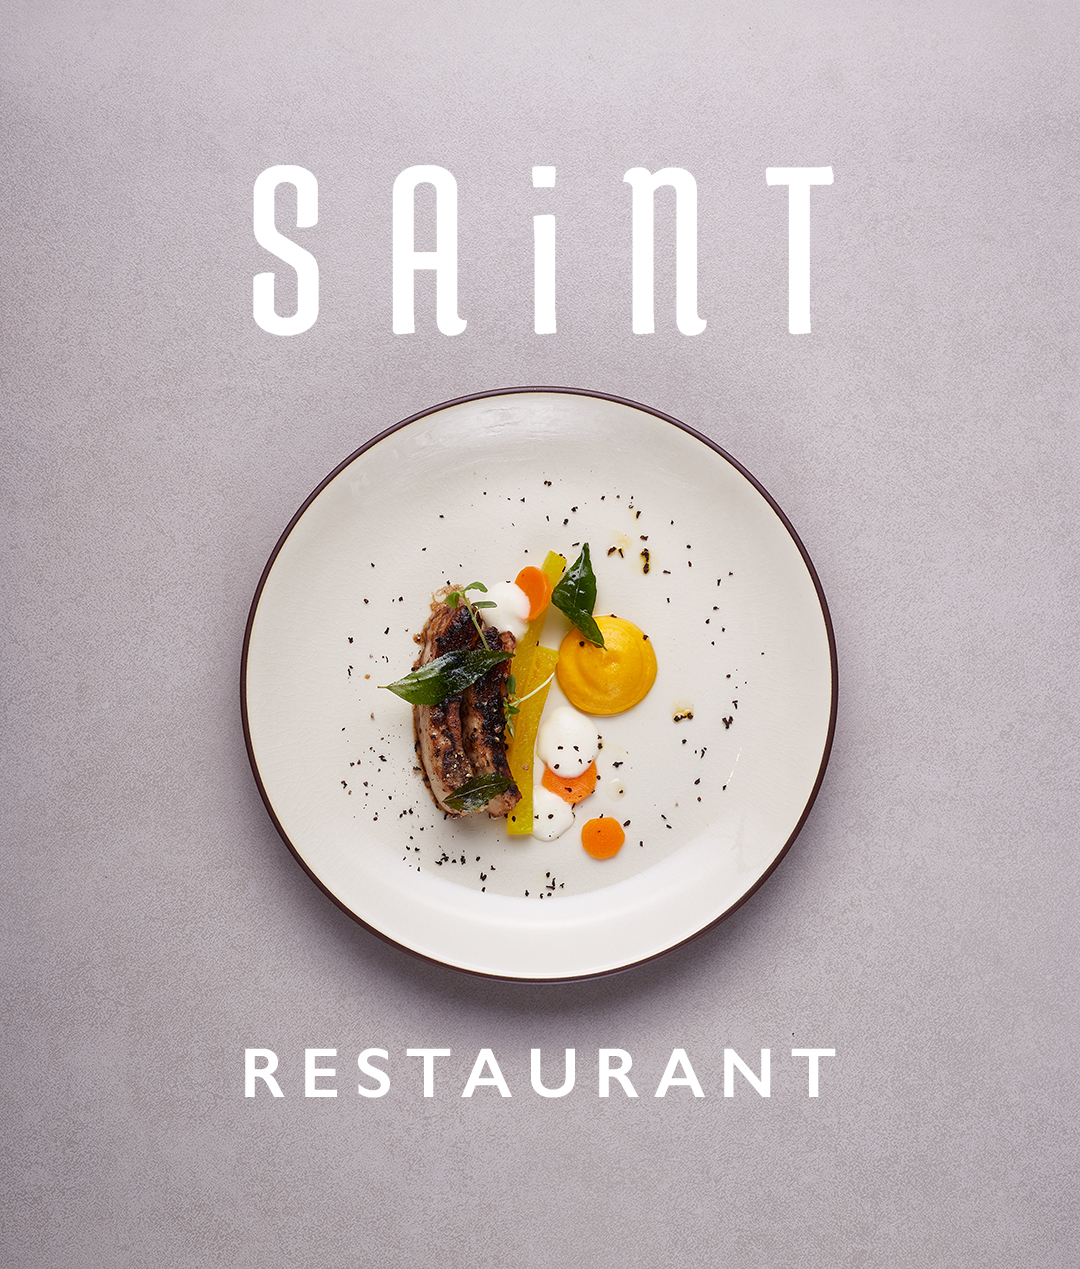 Saint O Restaurant: a beautiful plate of food.